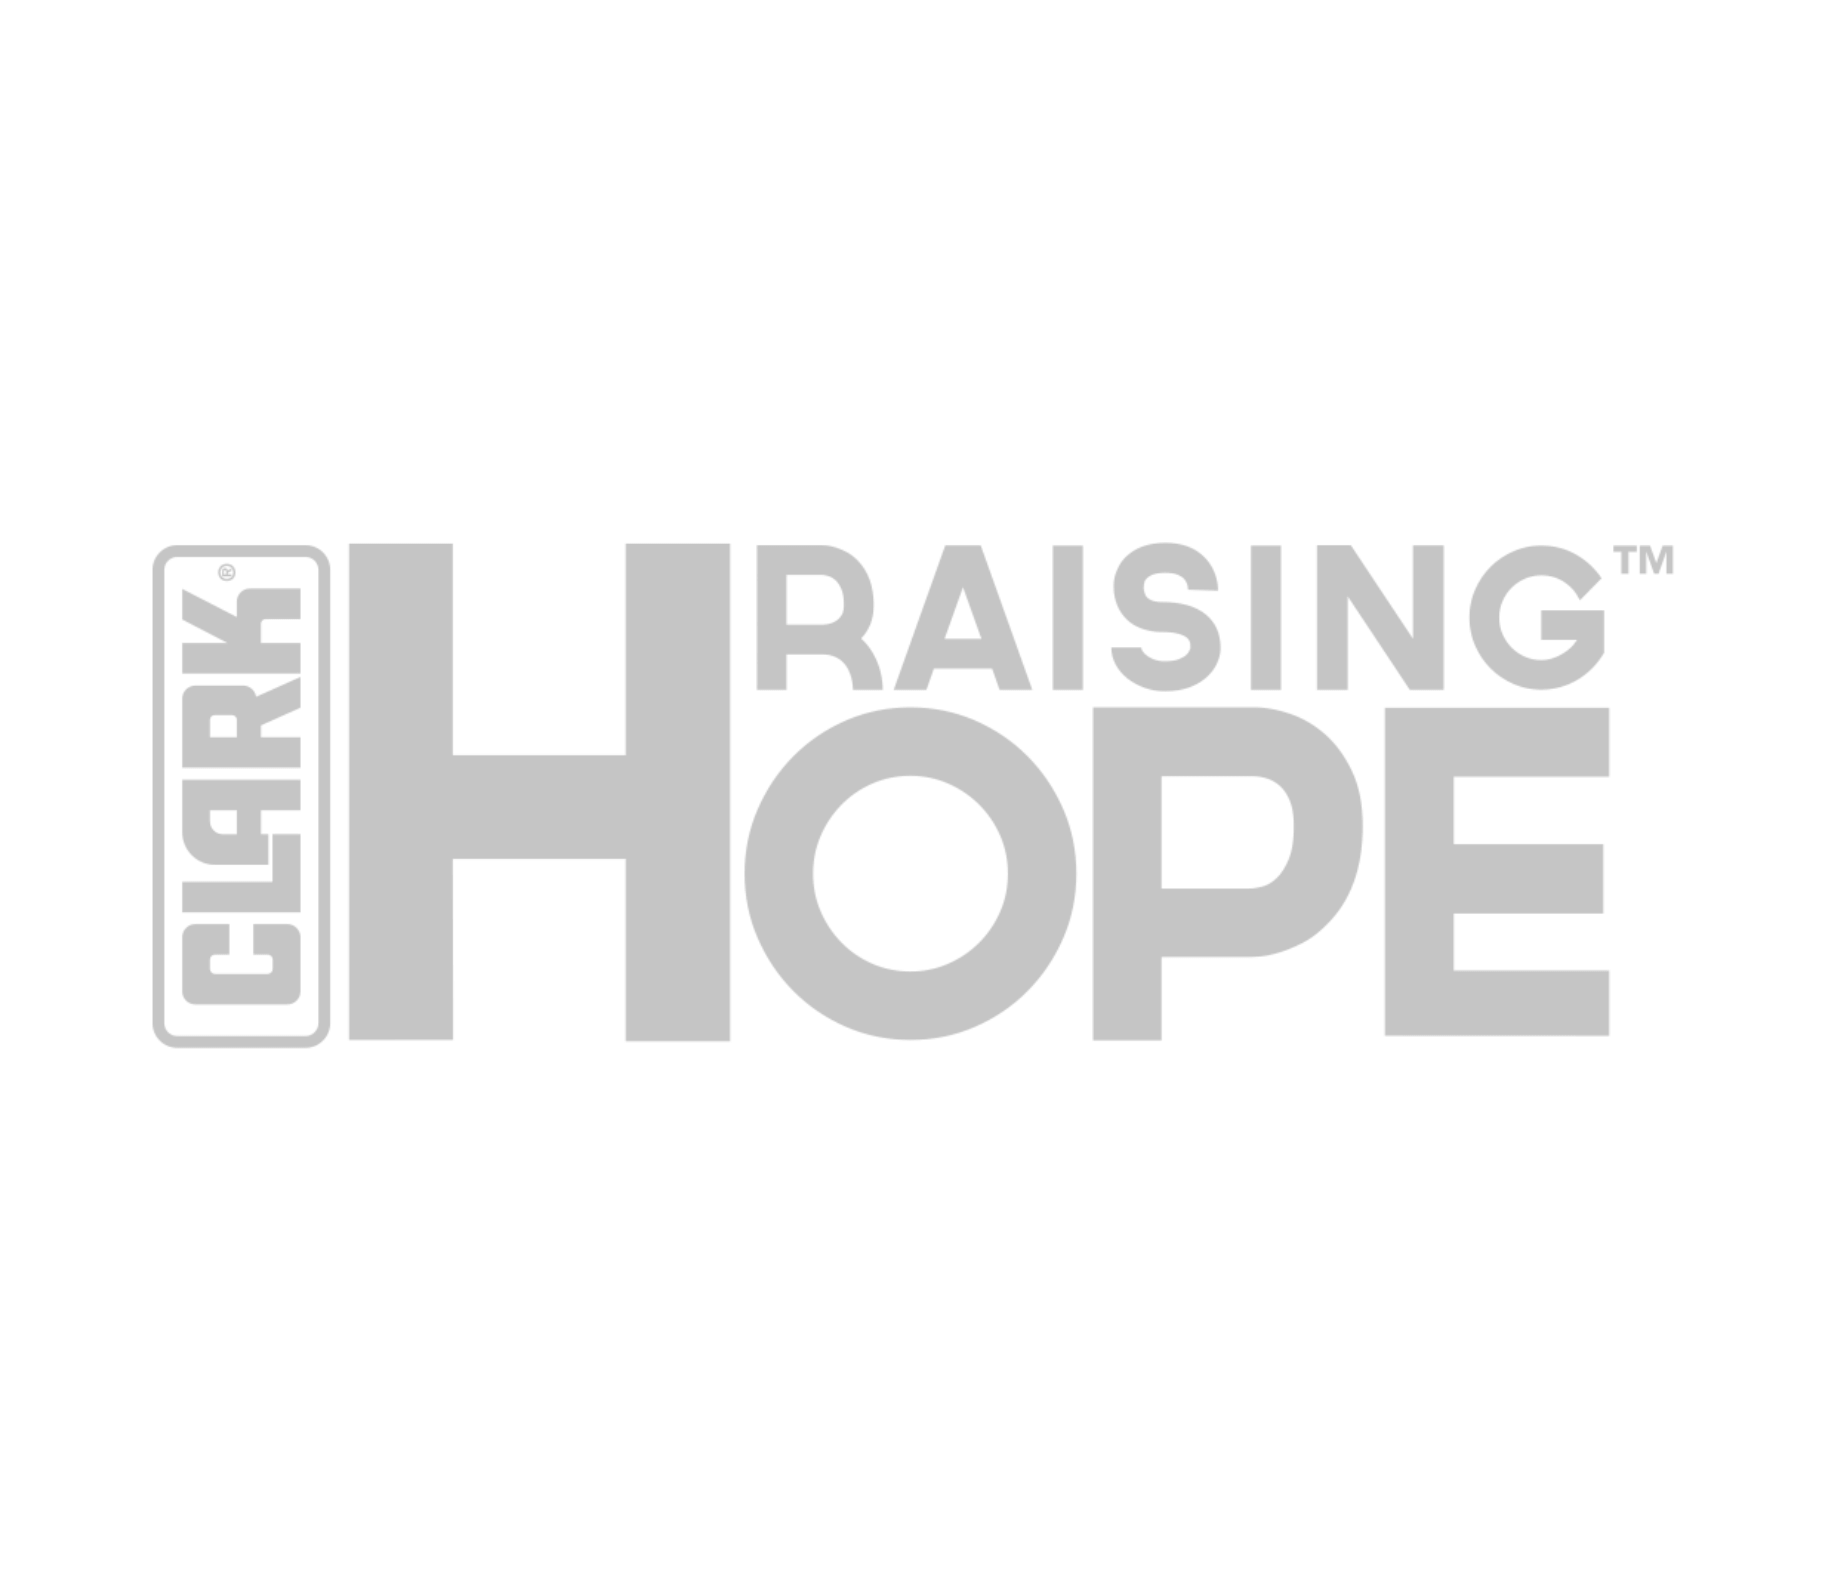 CMH Raising Hope